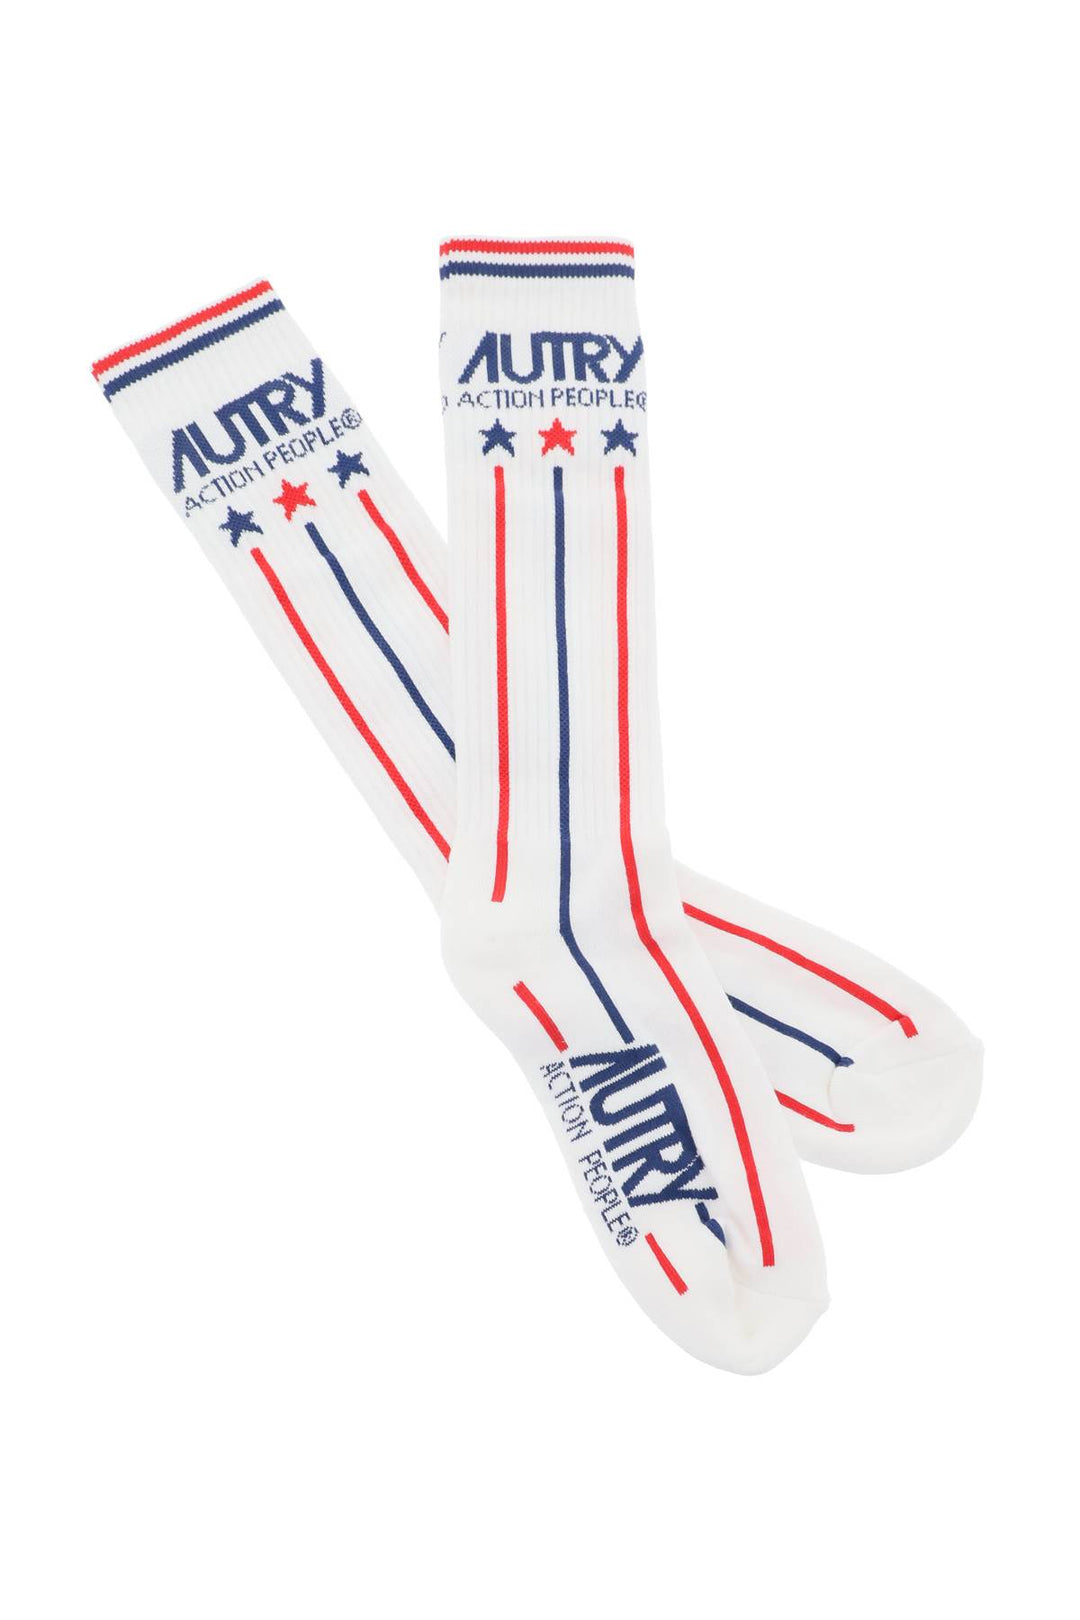 Autry Tennis Socks   Bianco